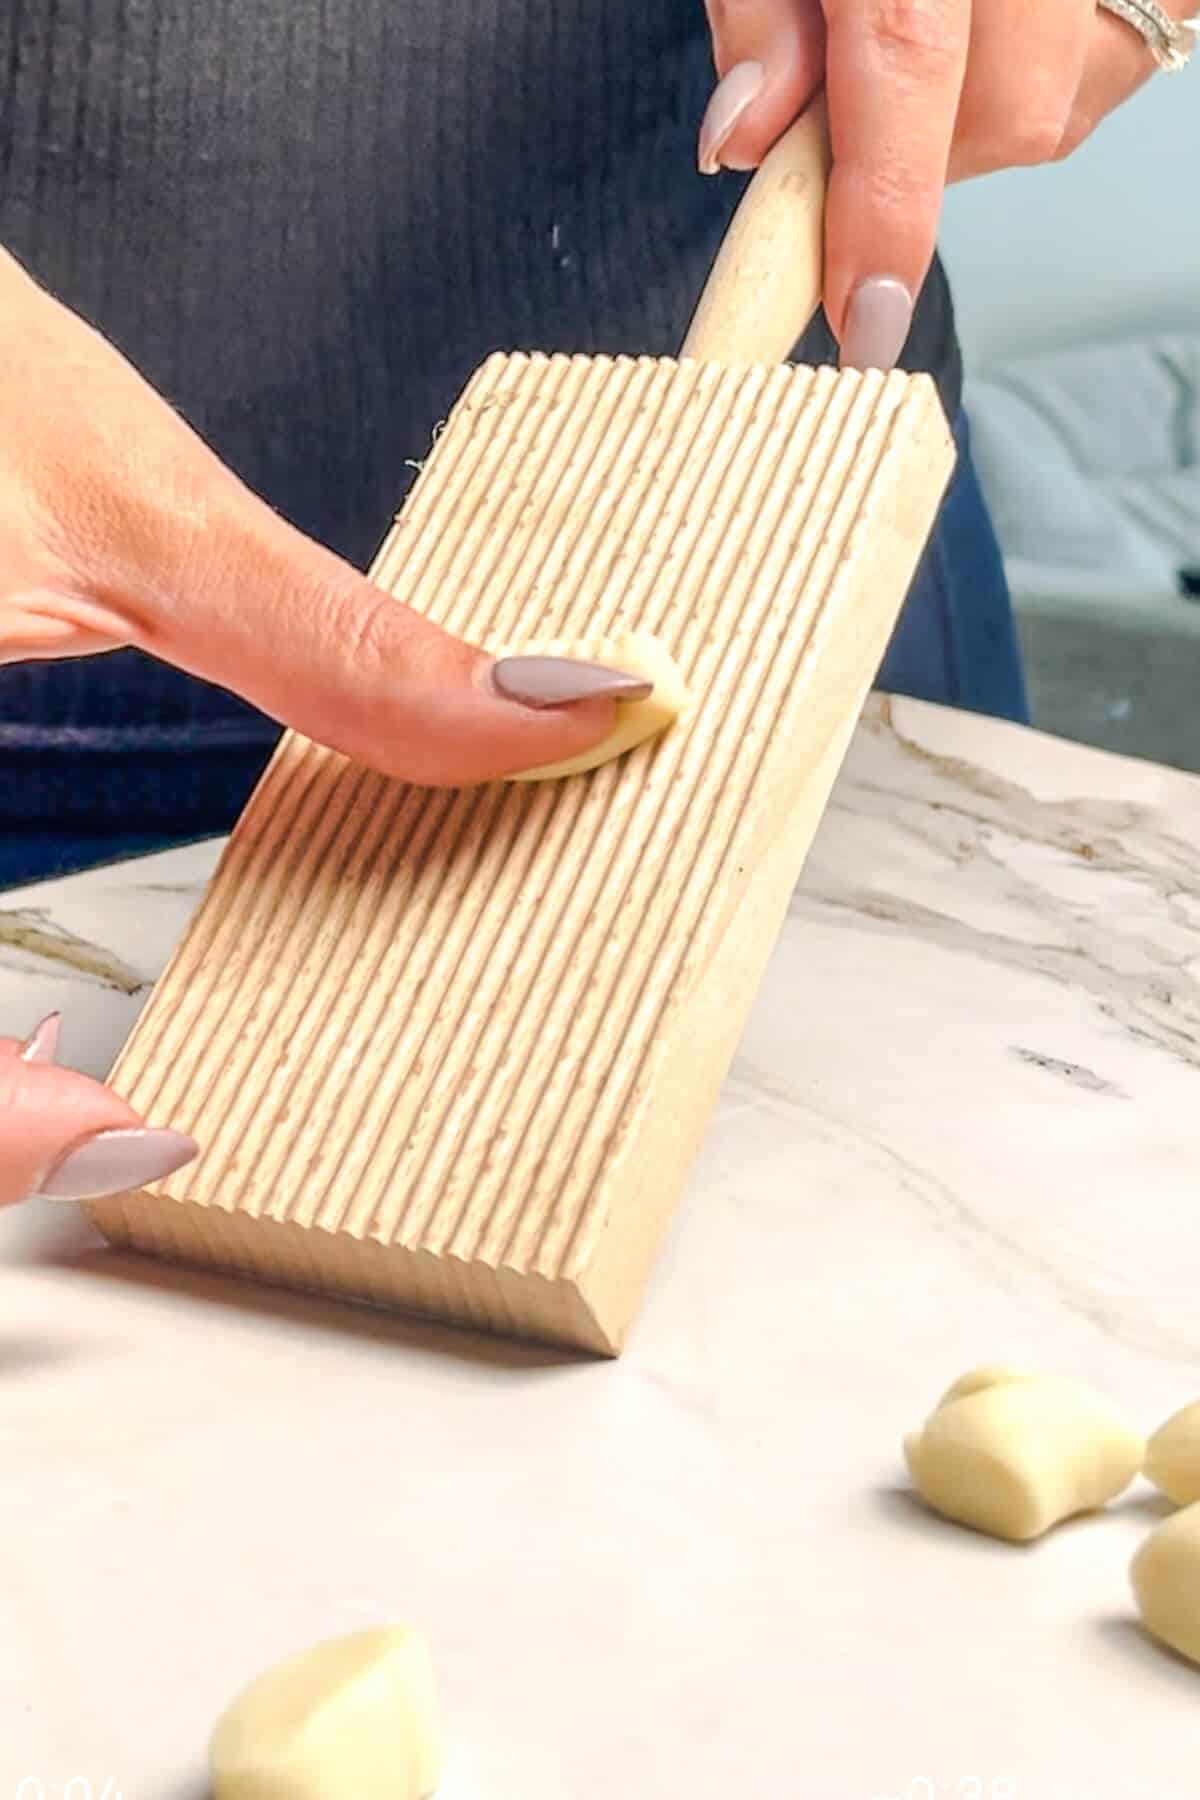 making gnocchi with a gnocchi board